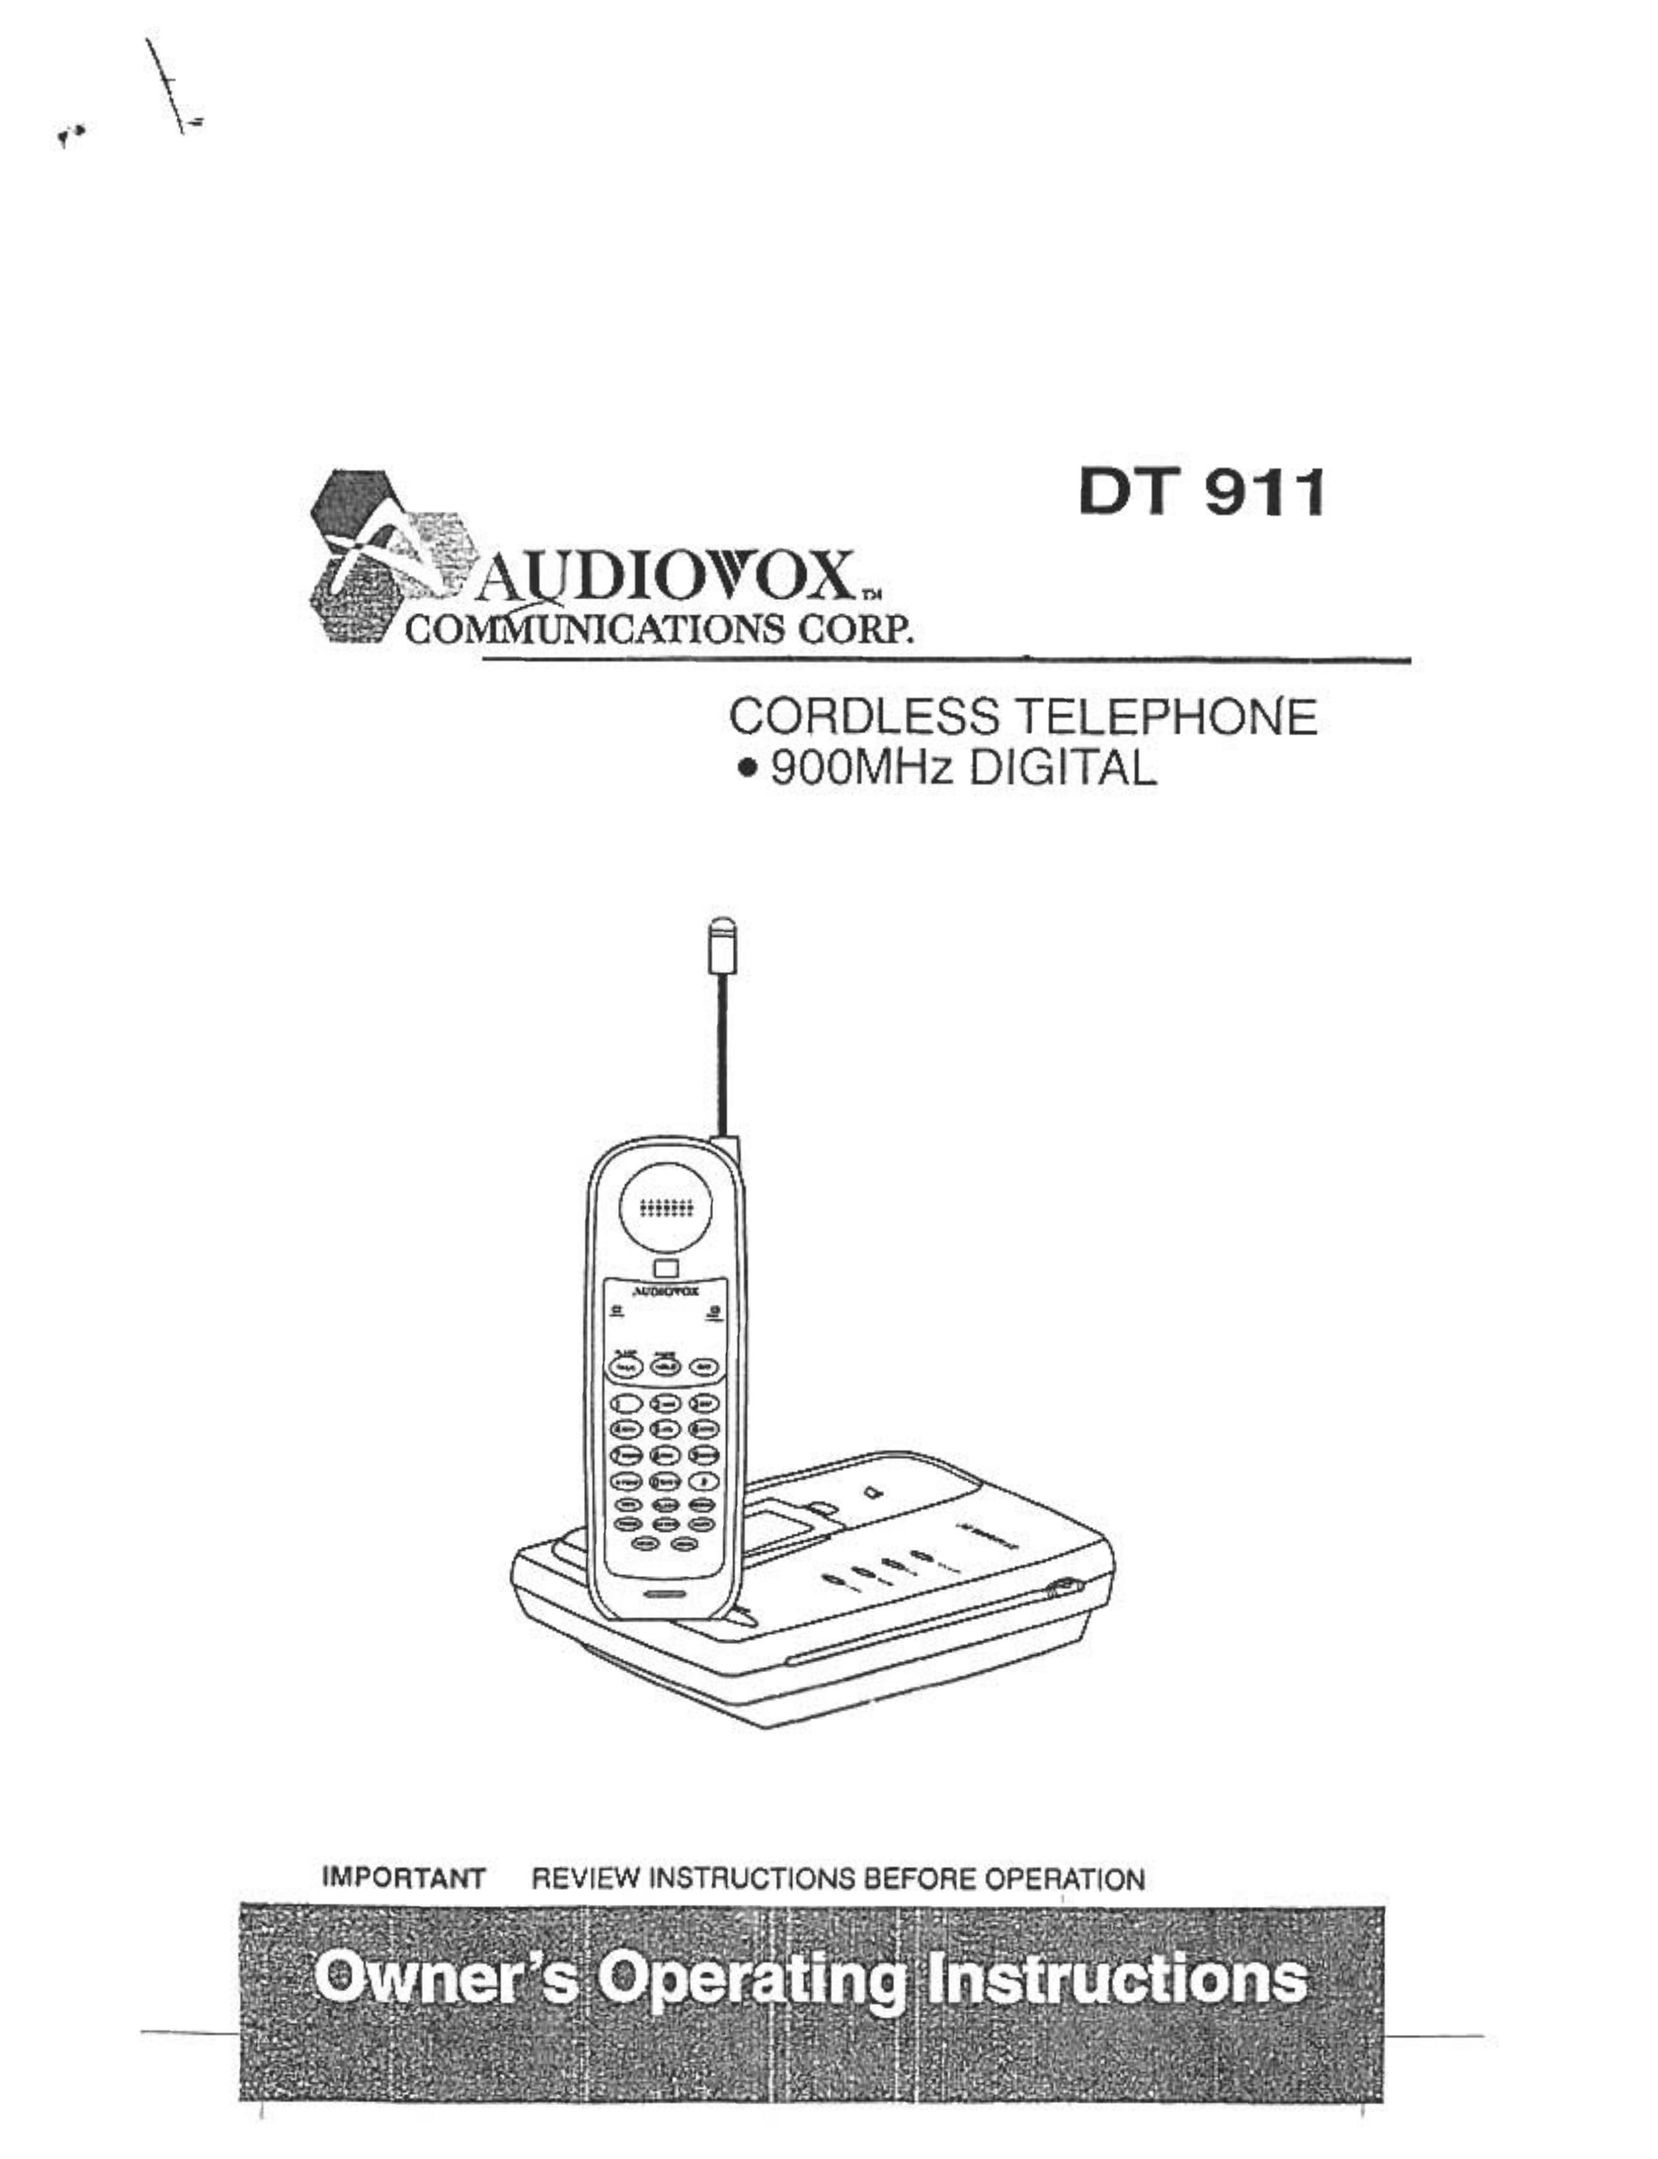 Audiovox DT 911 Cordless Telephone User Manual